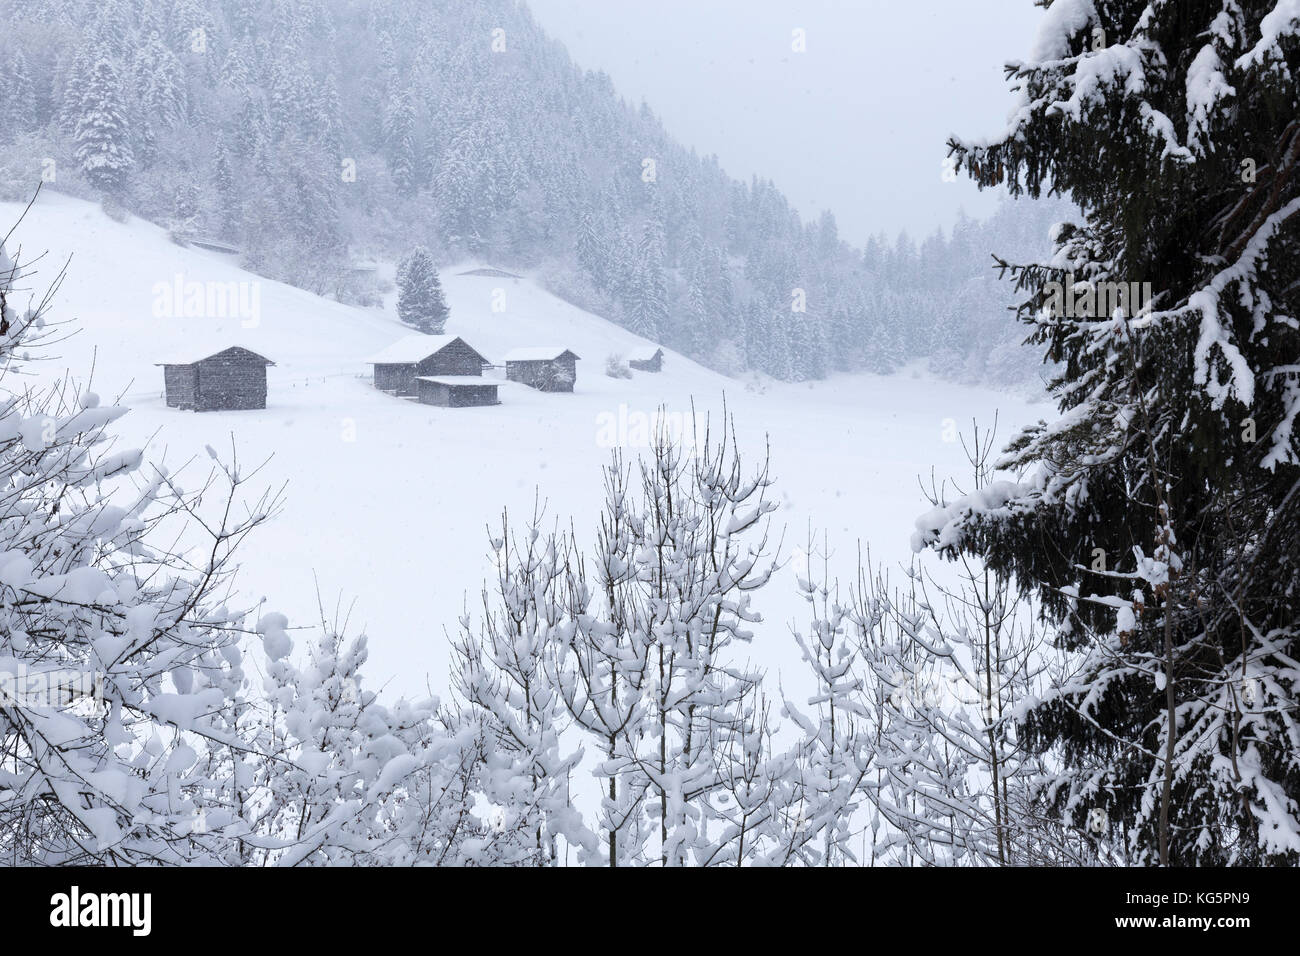 Huts during a heavy snowfall. Versam, Safiental, Surselva, Graubunden, Switzerland, Europe Stock Photo